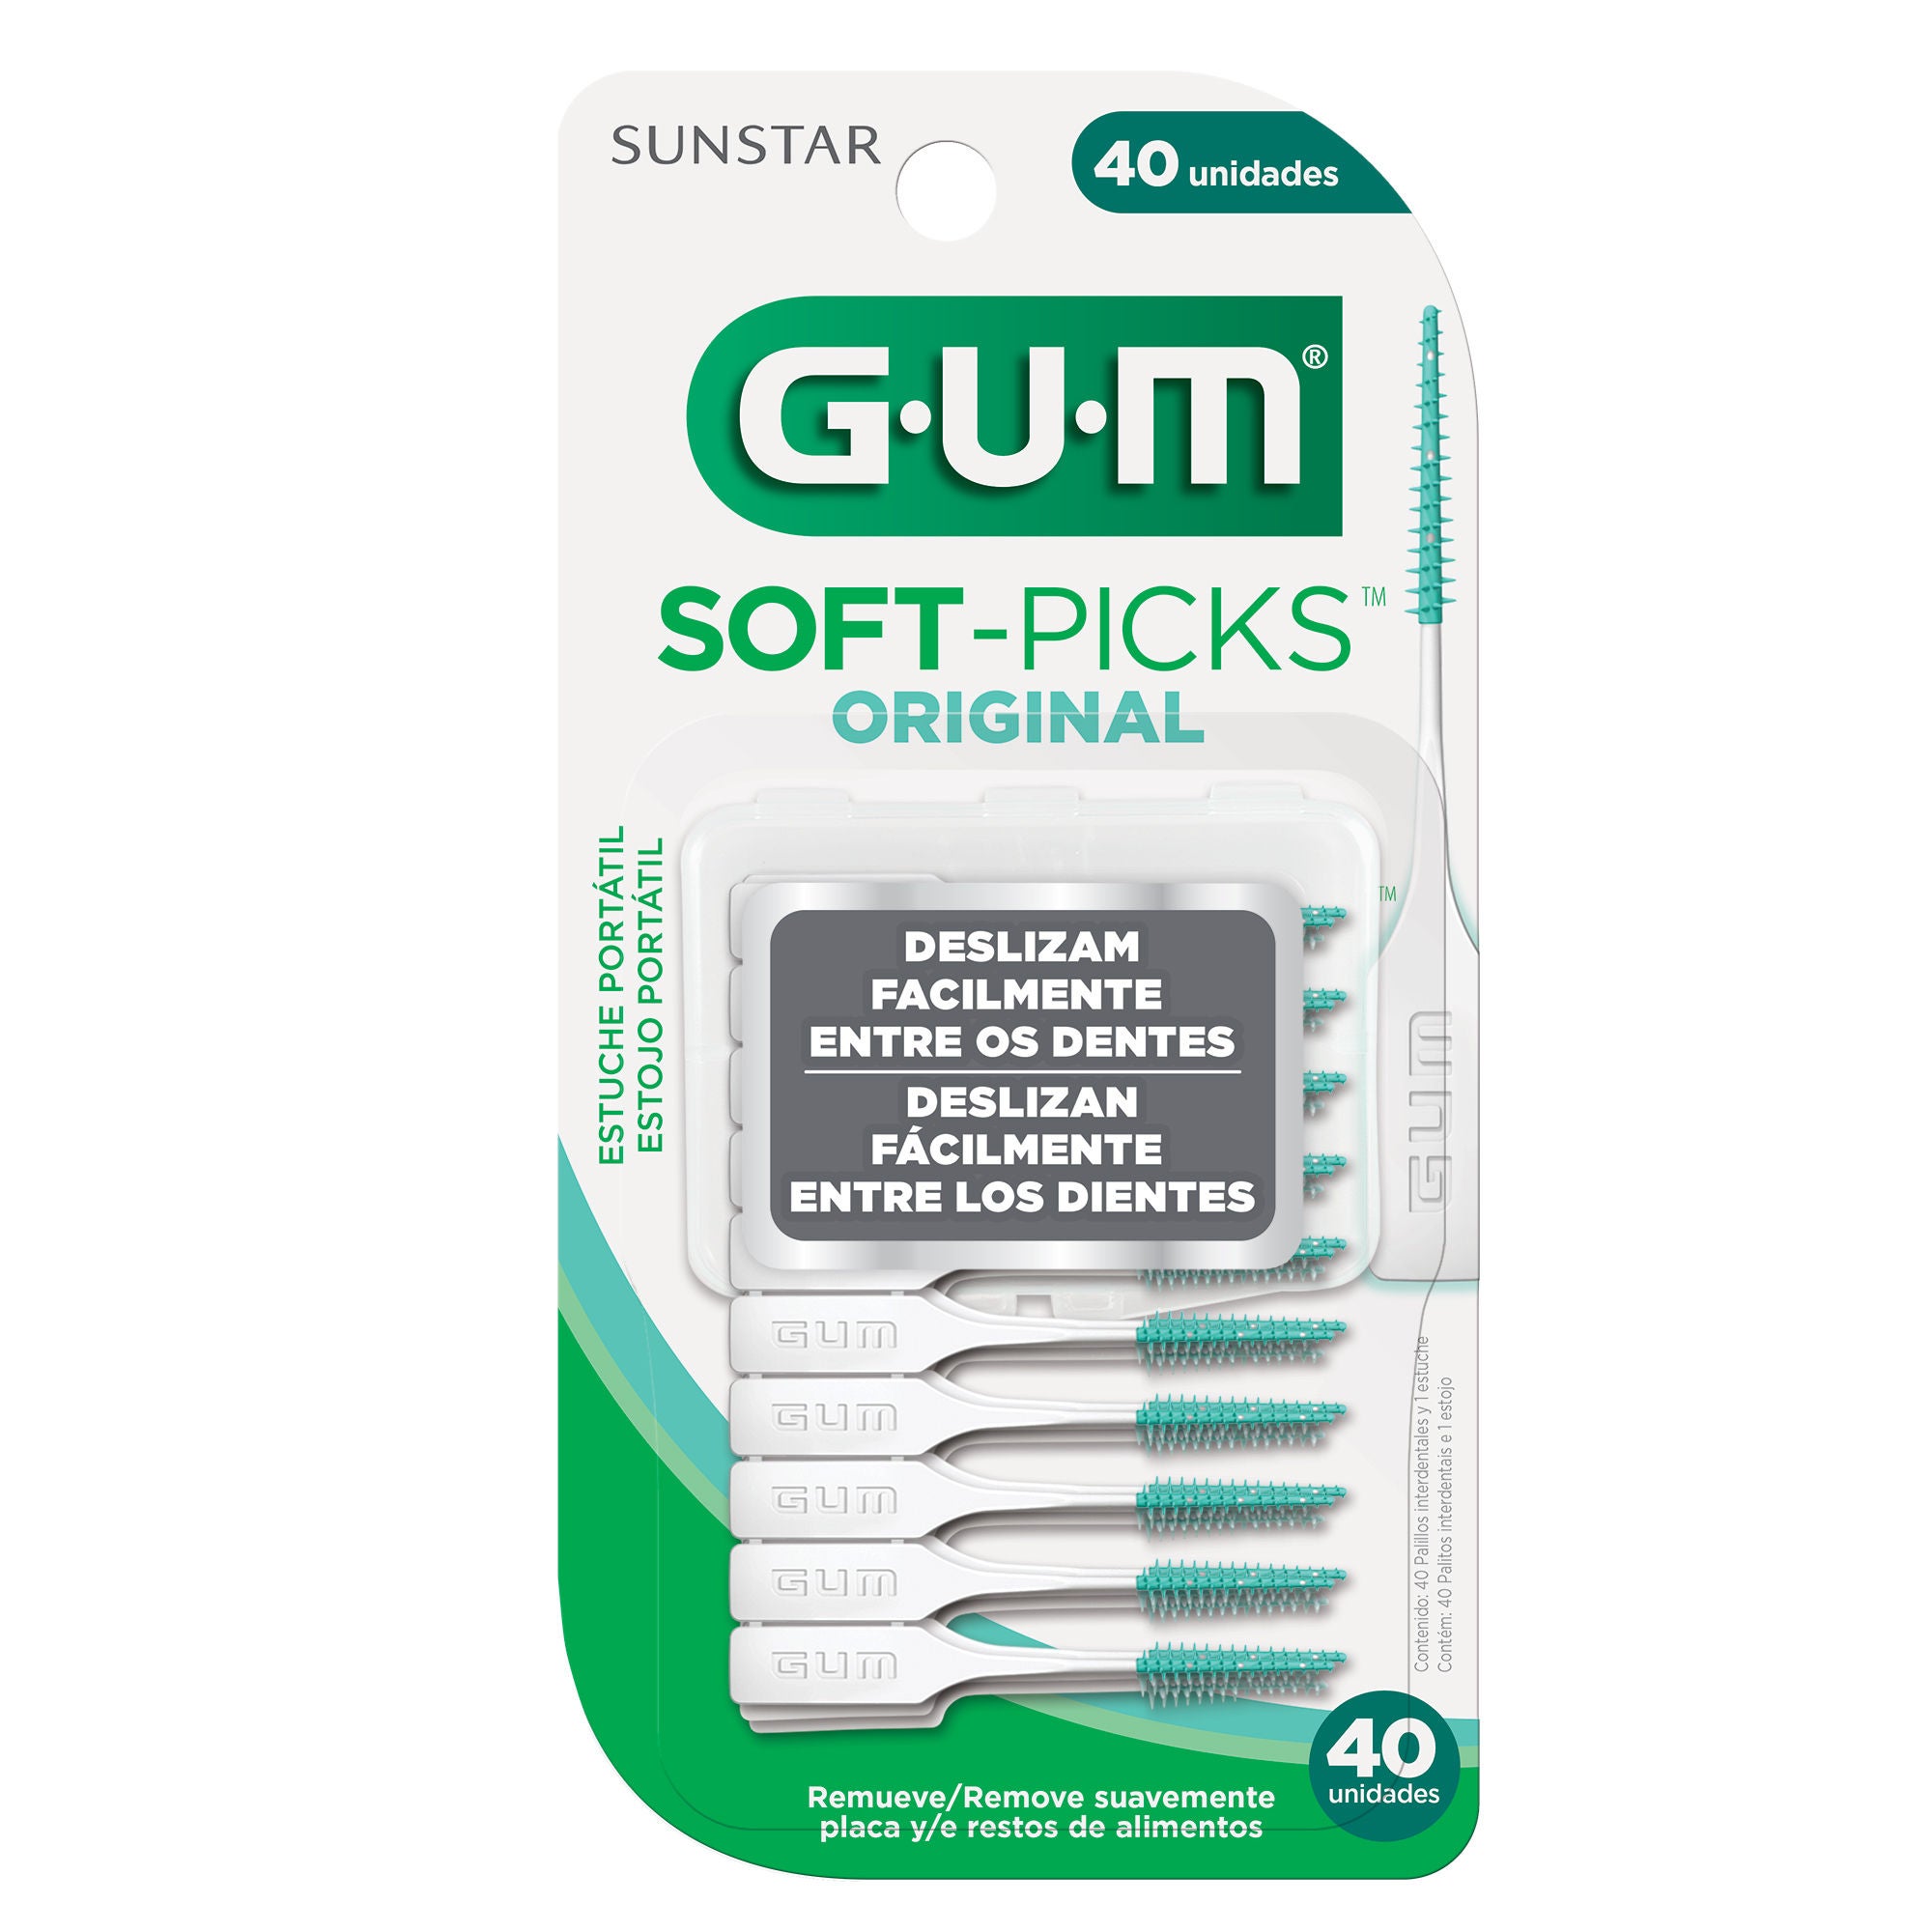 GUM Soft-Picks Original - Palillos Interdentales con punta de hule suave, estuche x 40u.